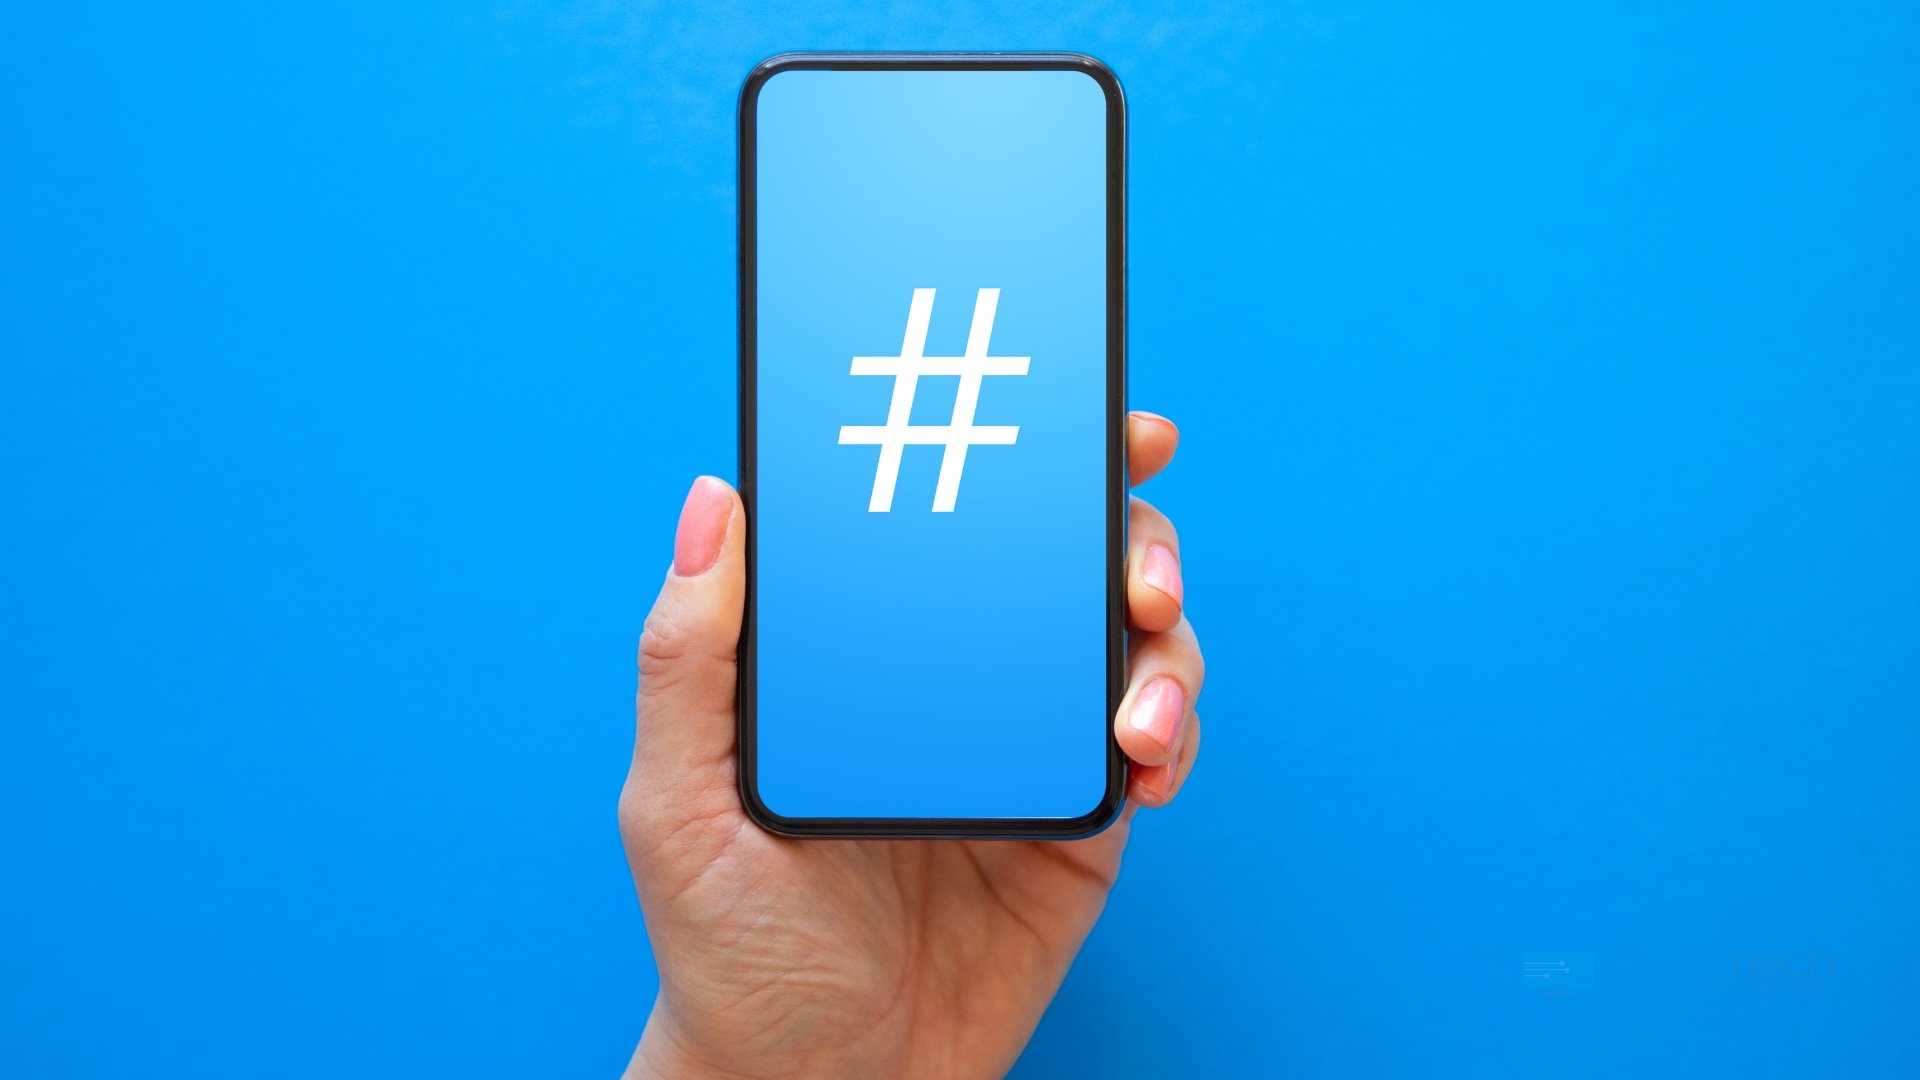 App do Twitter sobre hashtag